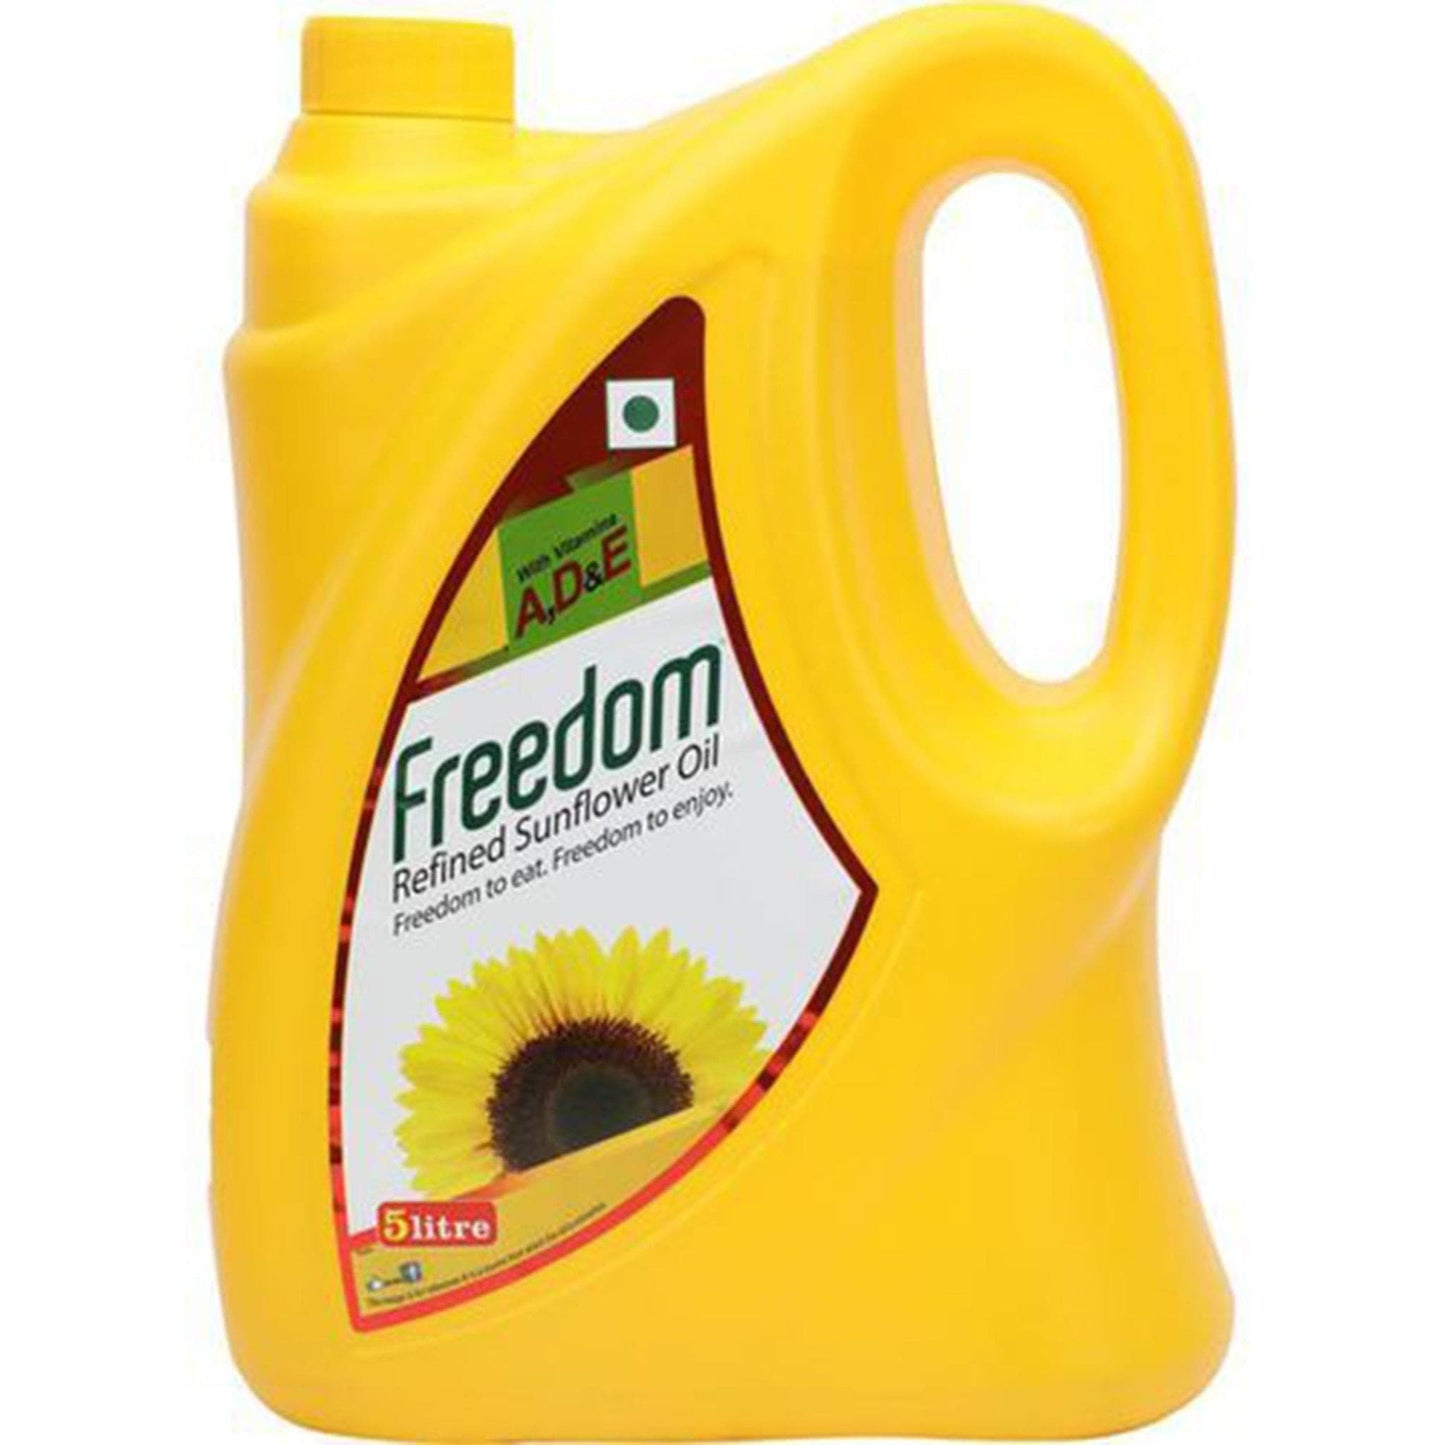 Freedom Refined Sunflower oil.